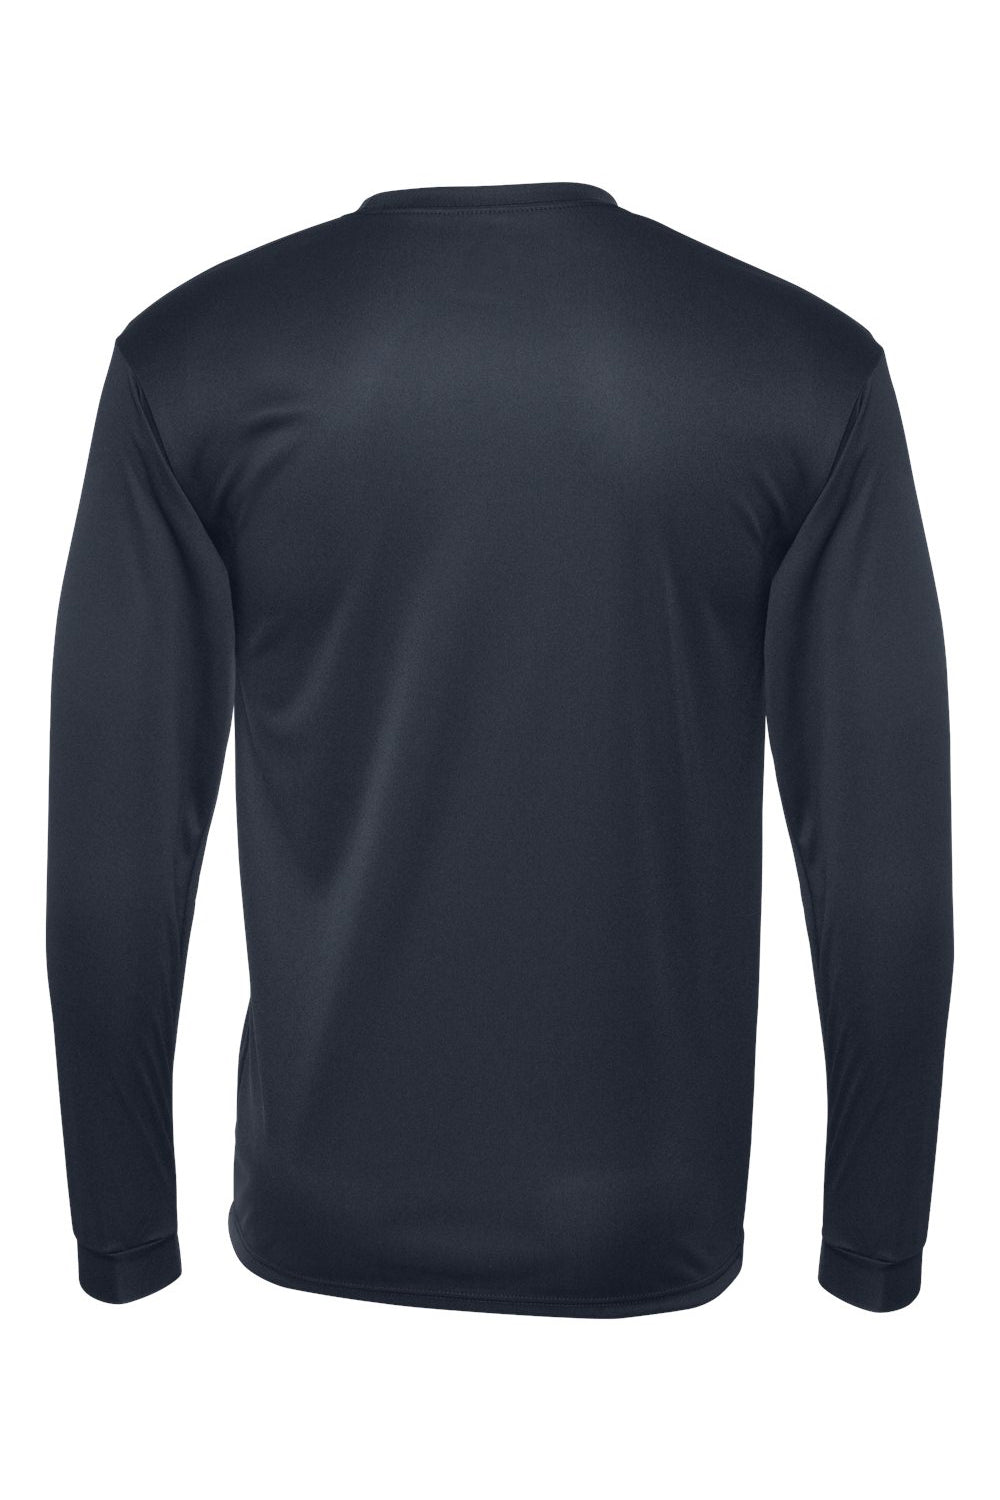 C2 Sport 5104 Mens Performance Moisture Wicking Long Sleeve Crewneck T-Shirt Navy Blue Flat Back